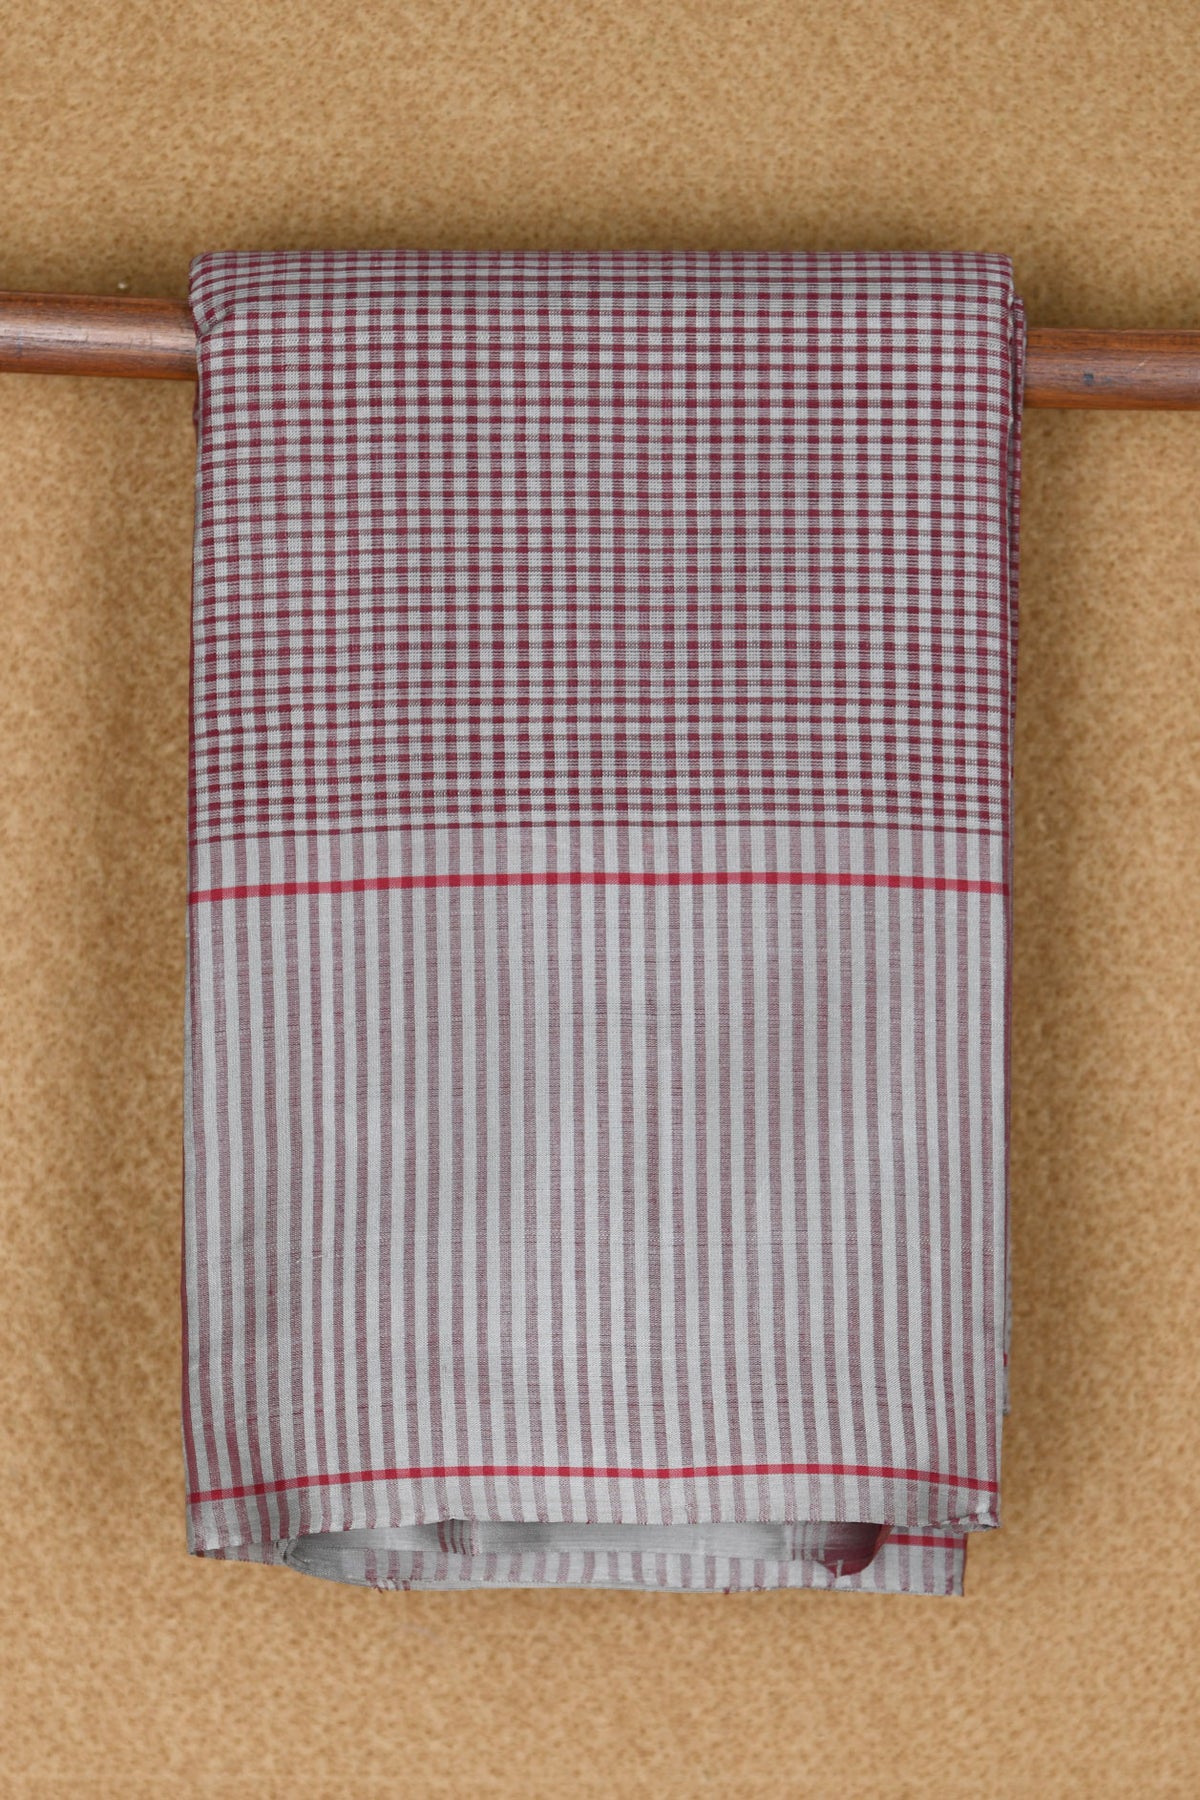 Vertical Stripes Border With Small Checks Grey And Maroon Koorainadu Cotton Saree